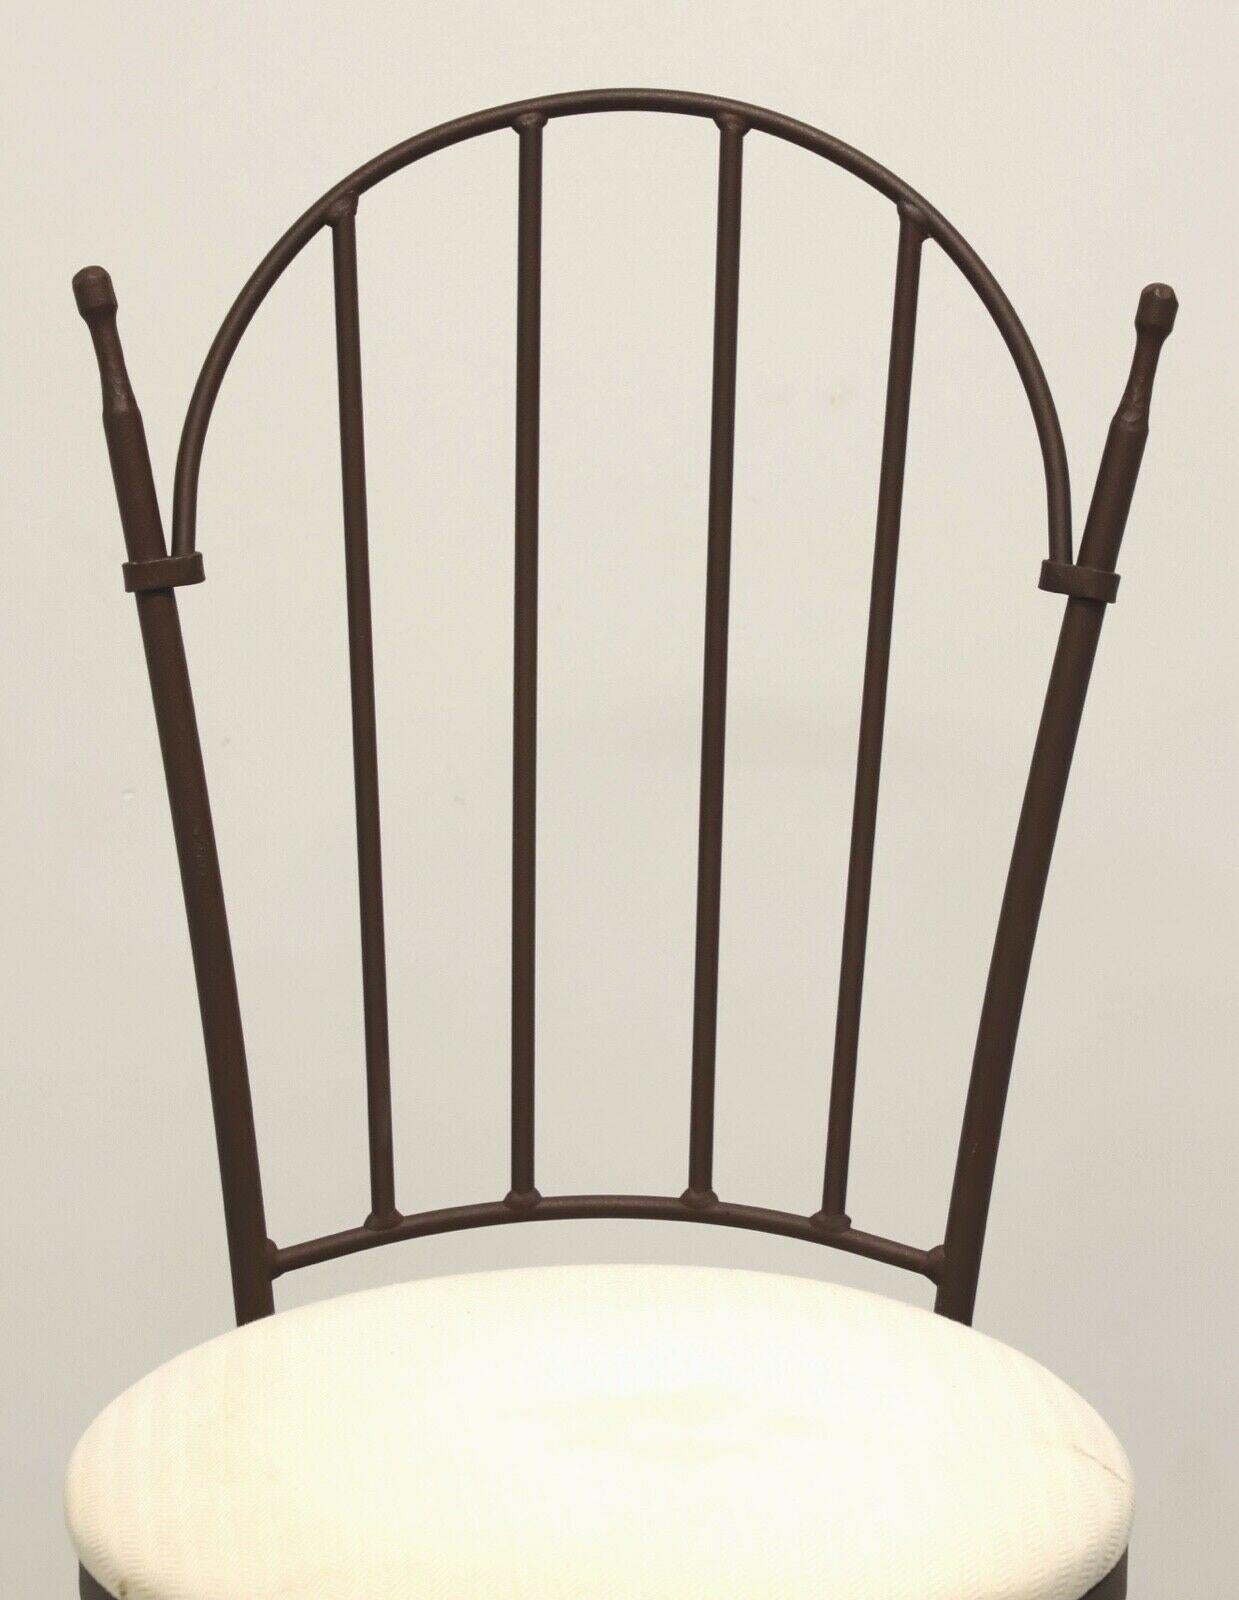 wrought iron stools -china -b2b -forum -blog -wikipedia -.cn -.gov -alibaba